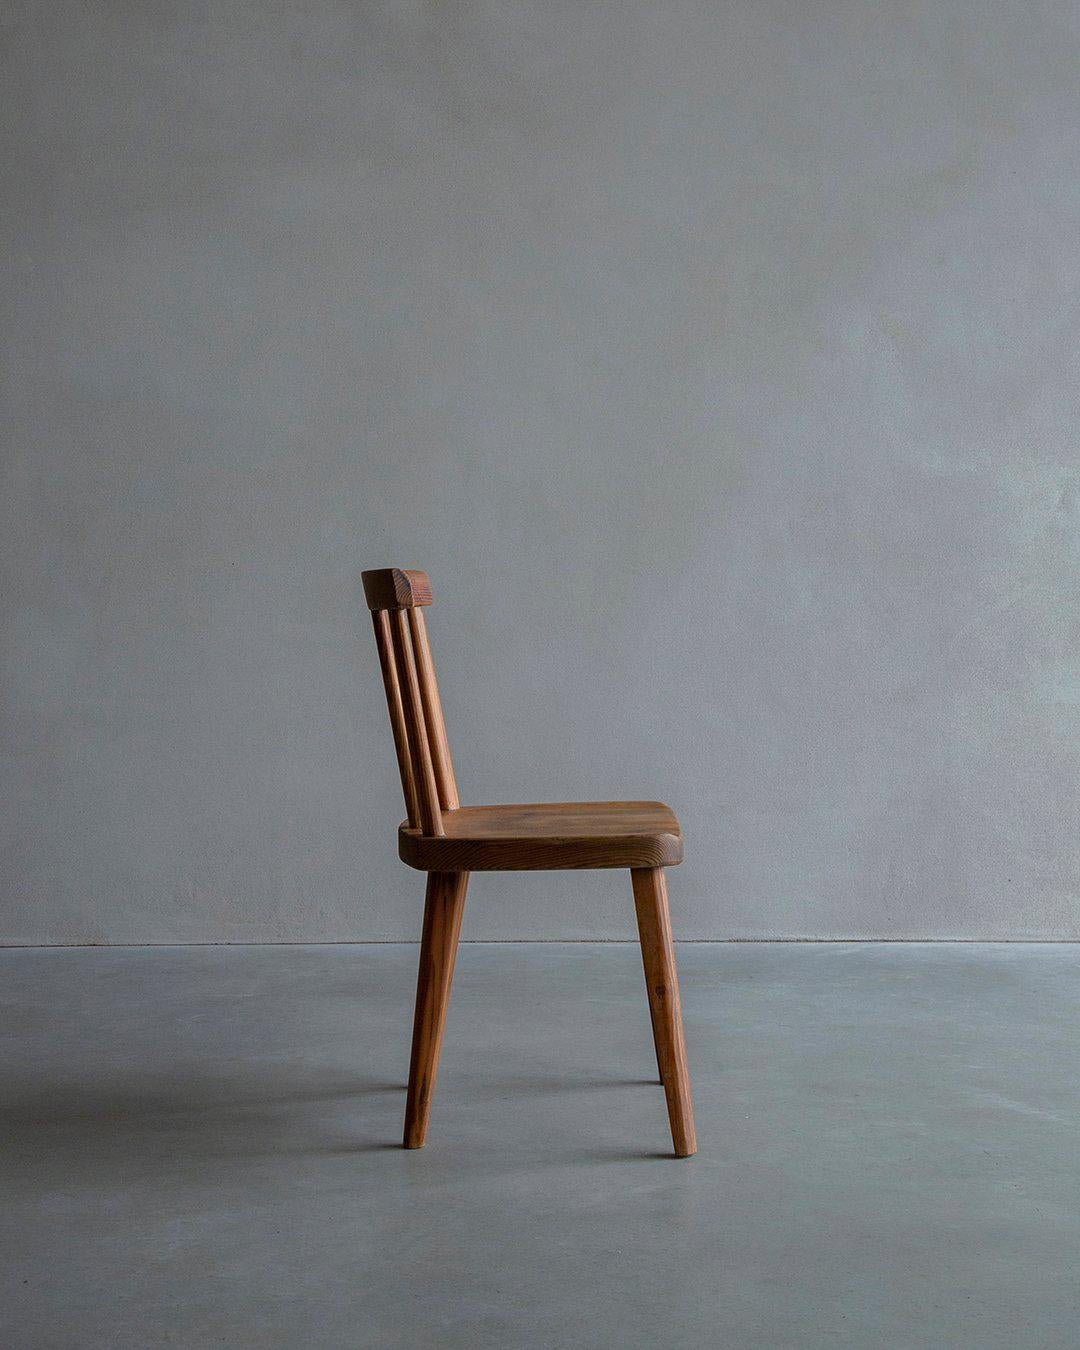 Suédois Axel Einar Hjorth - Utö Dining Chair - produit par Nordiska Kompaniet en Suède en vente